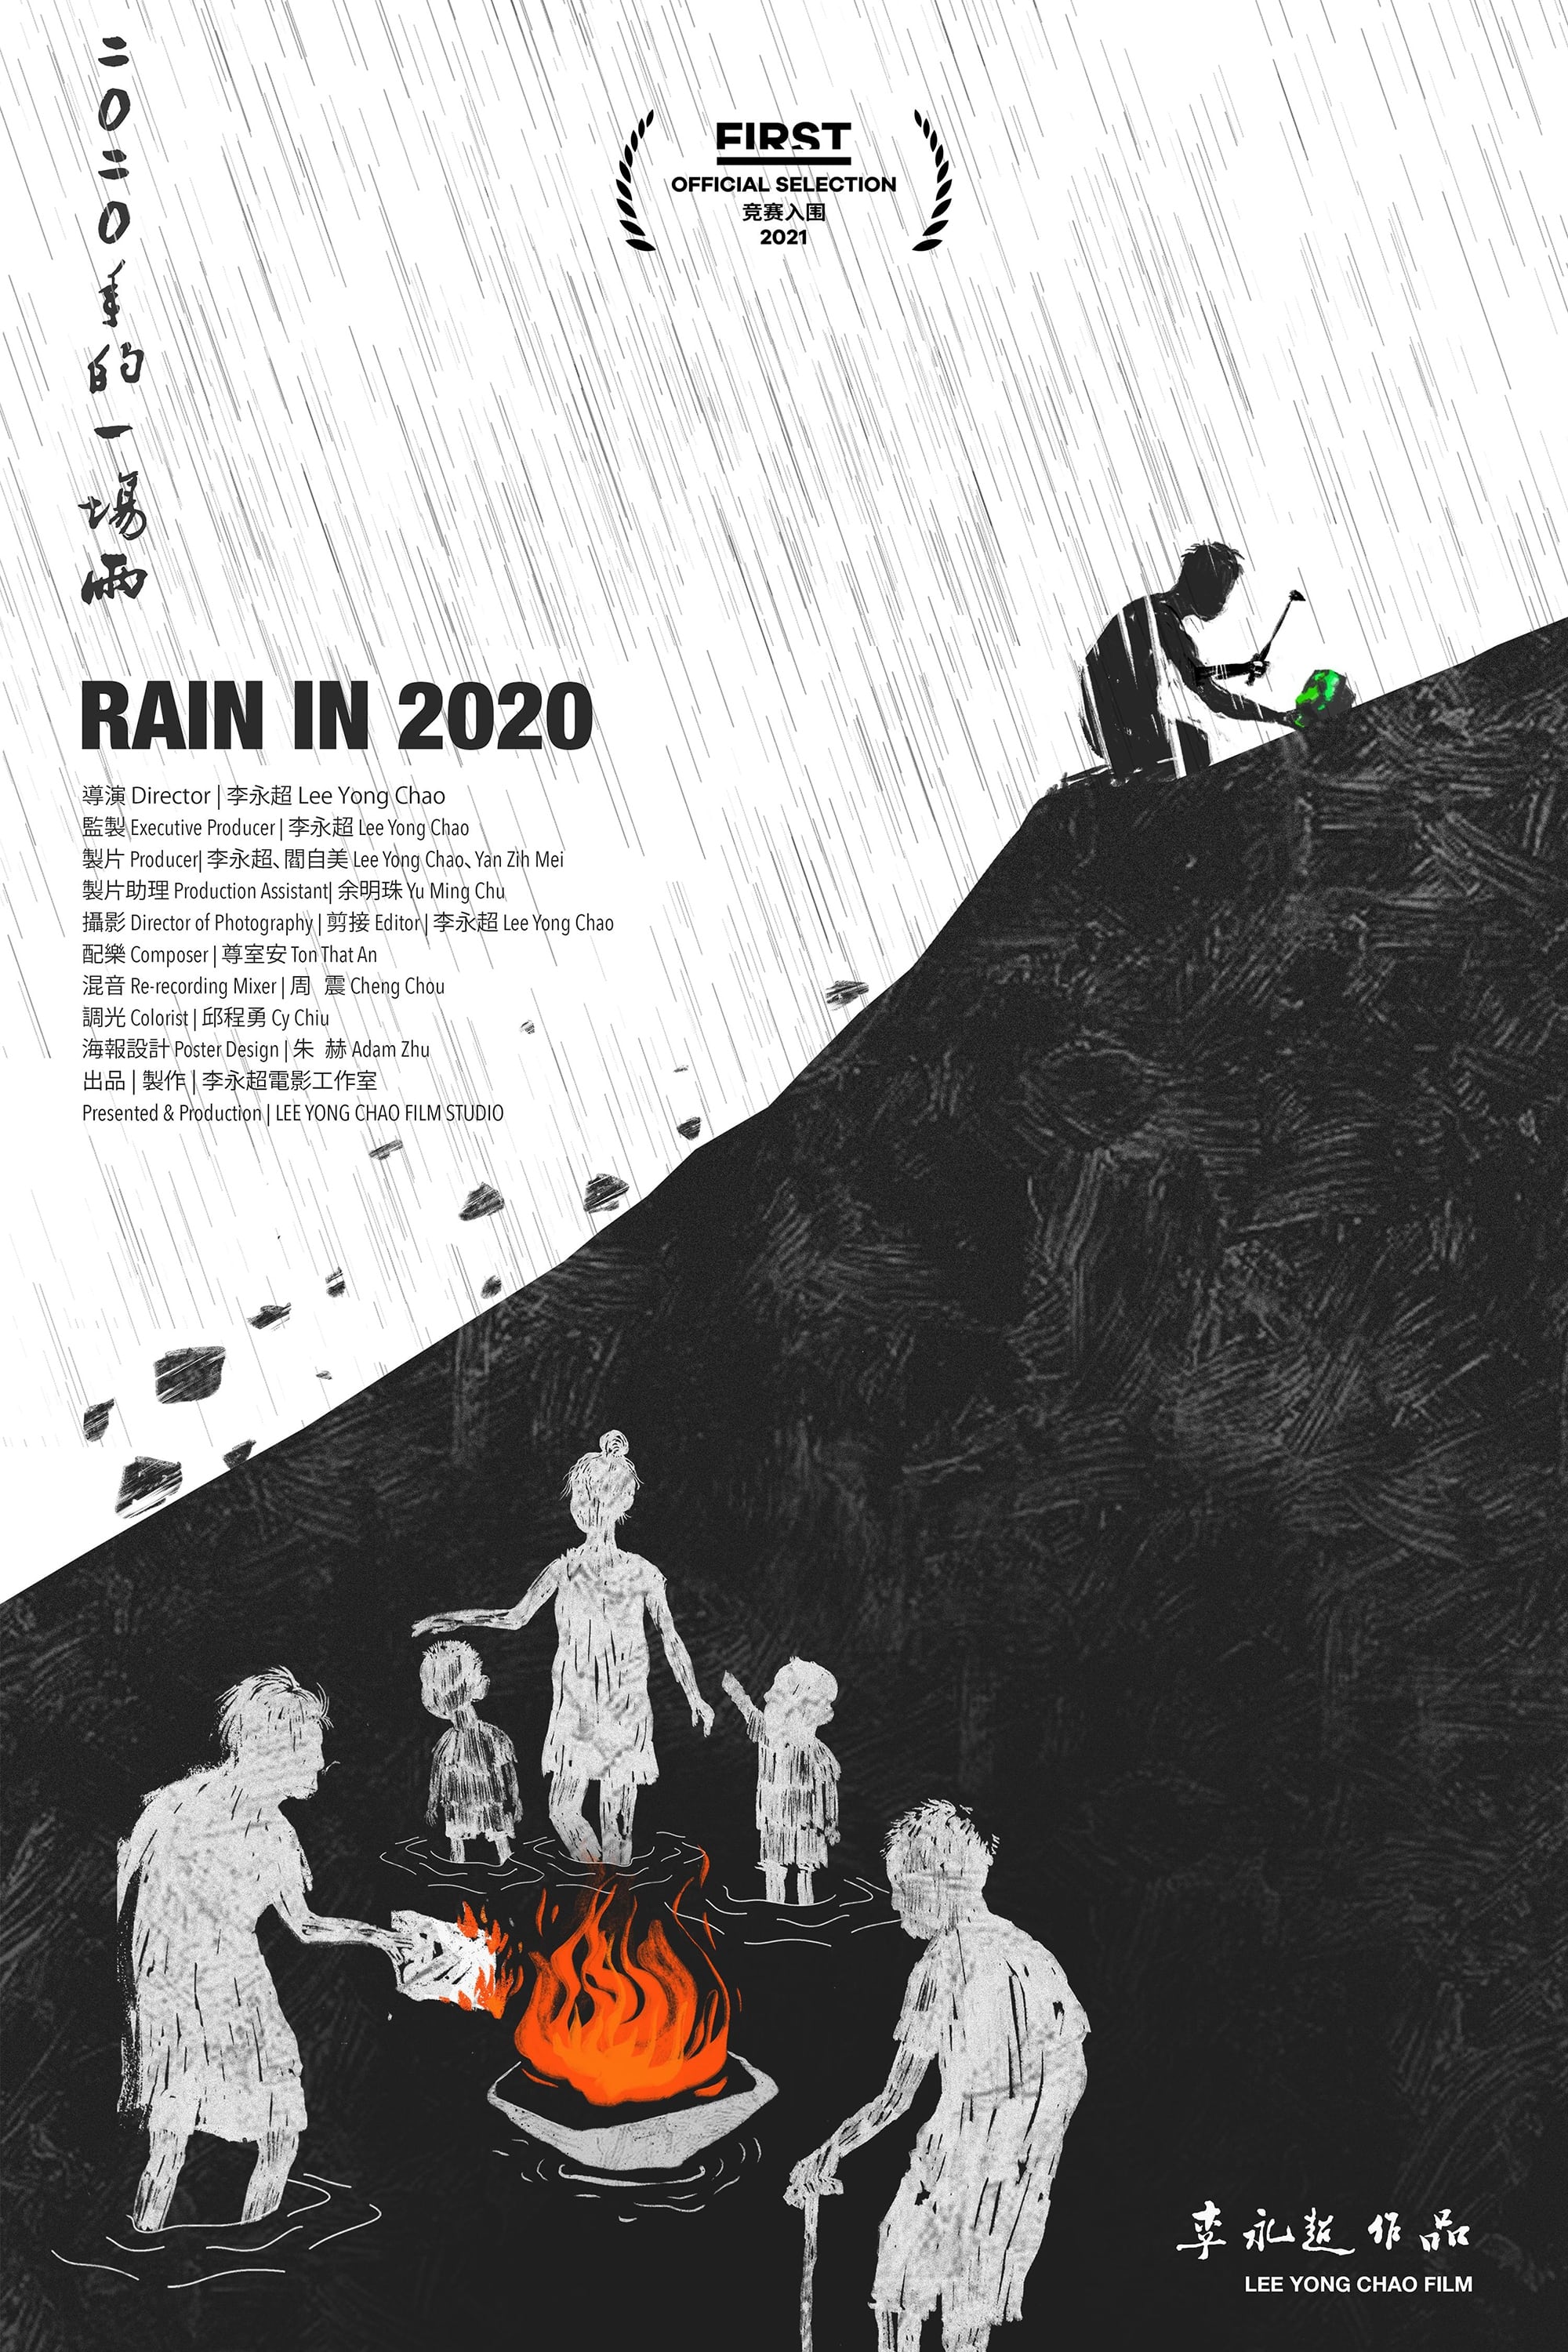 Rain in 2020